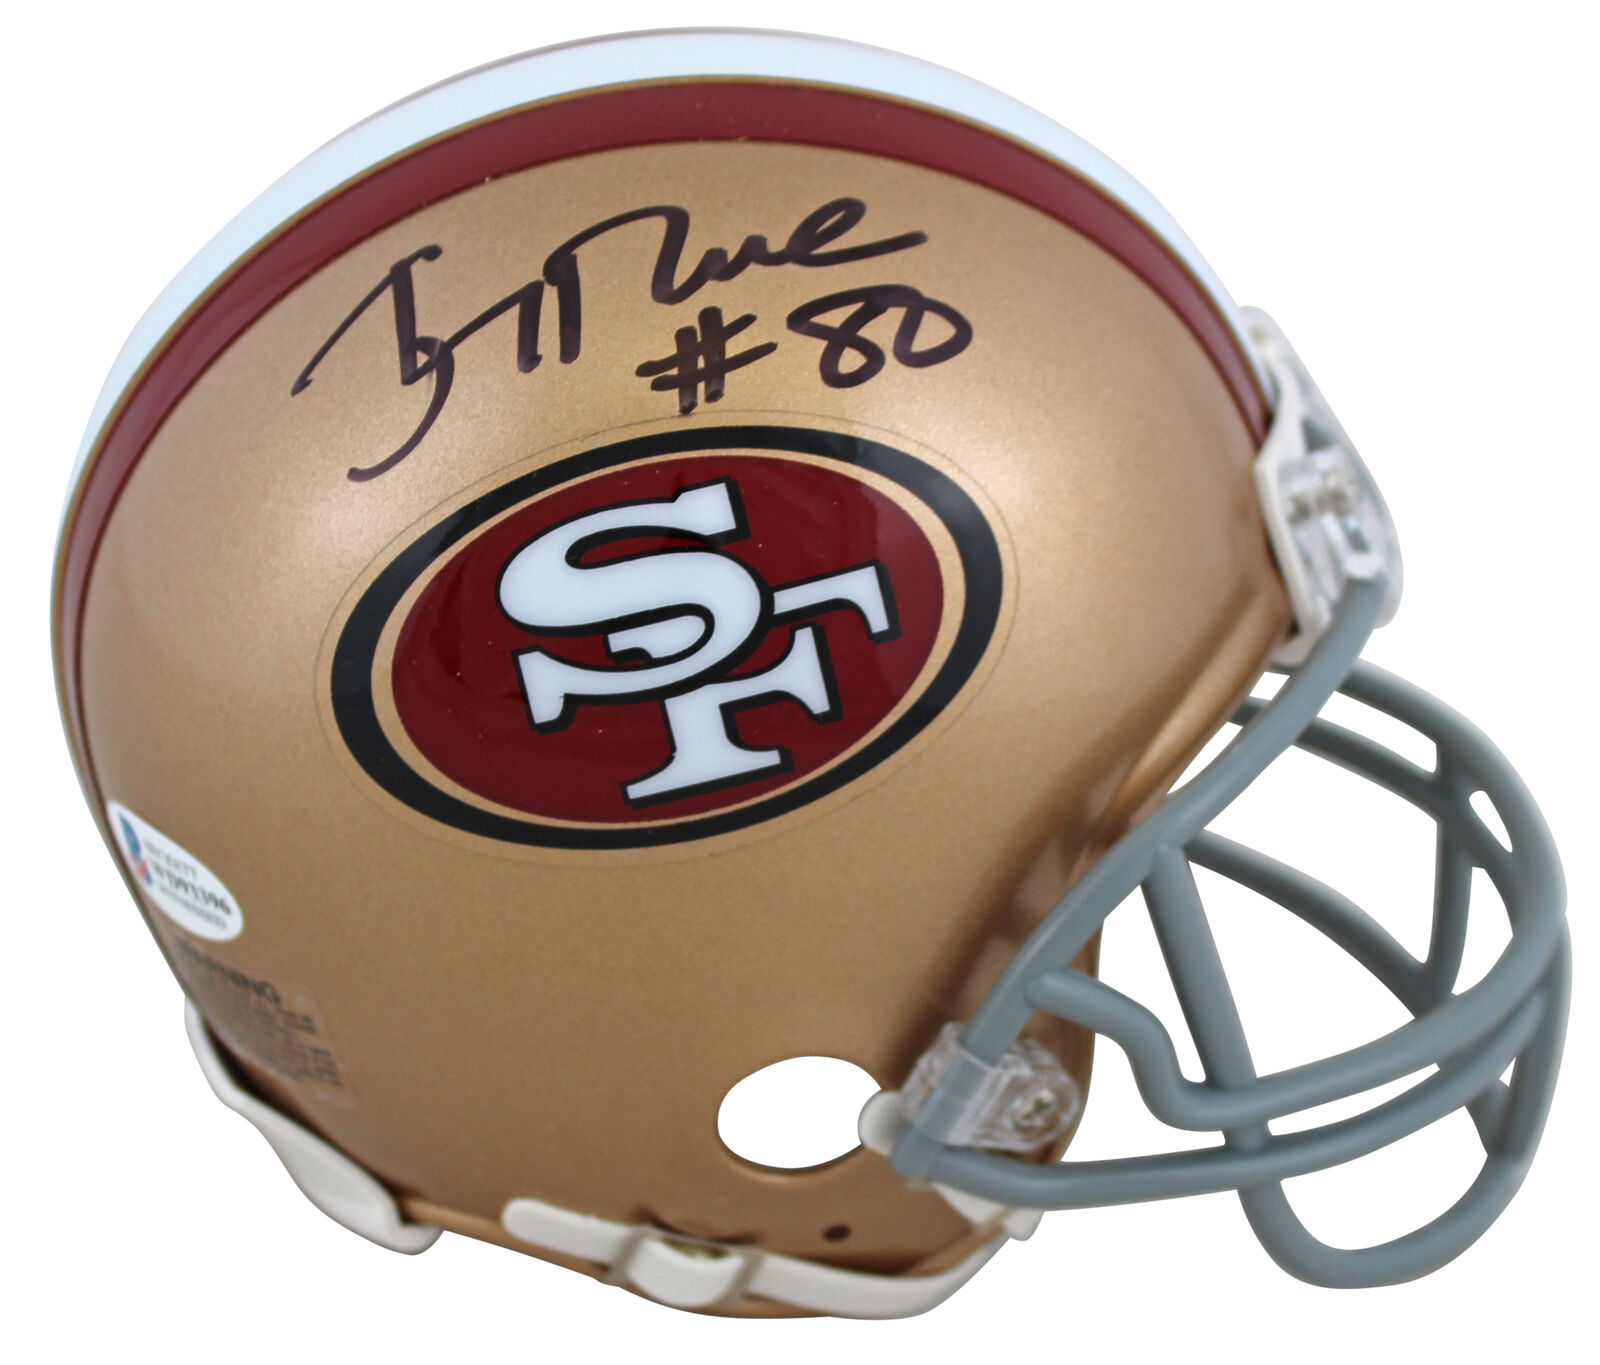 Jerry Rice Signed 49ers Mini Helmet